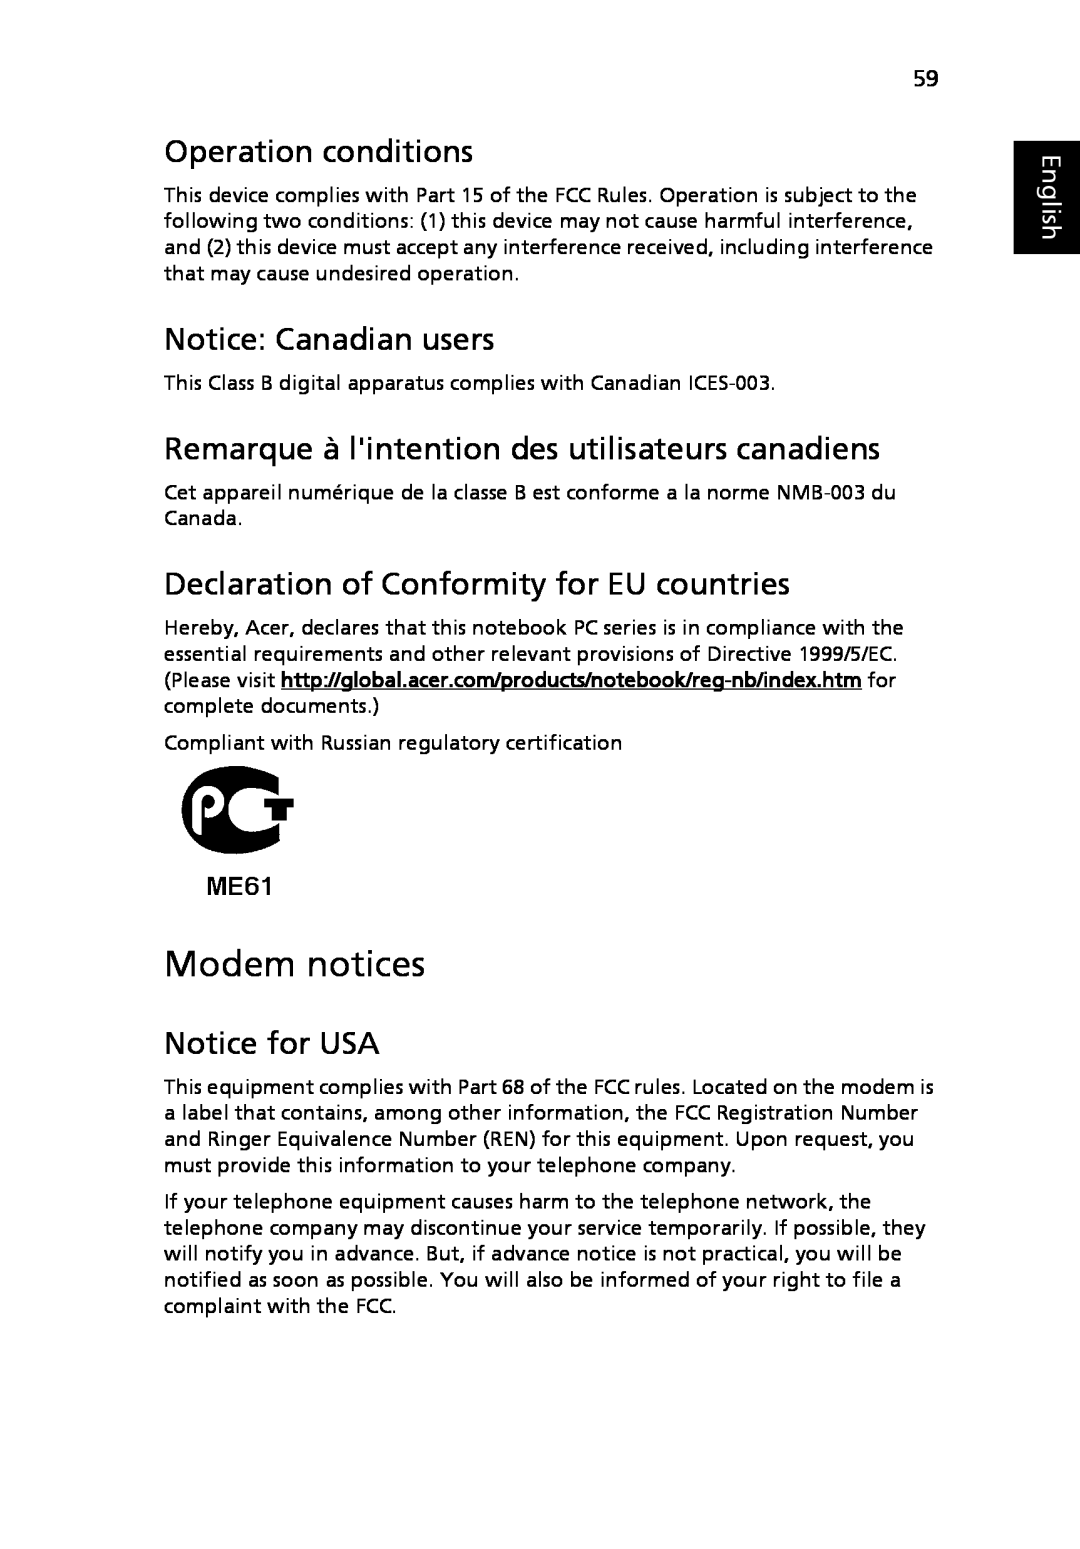 Acer 3630 Modem notices, Operation conditions, Notice Canadian users, Remarque à lintention des utilisateurs canadiens 